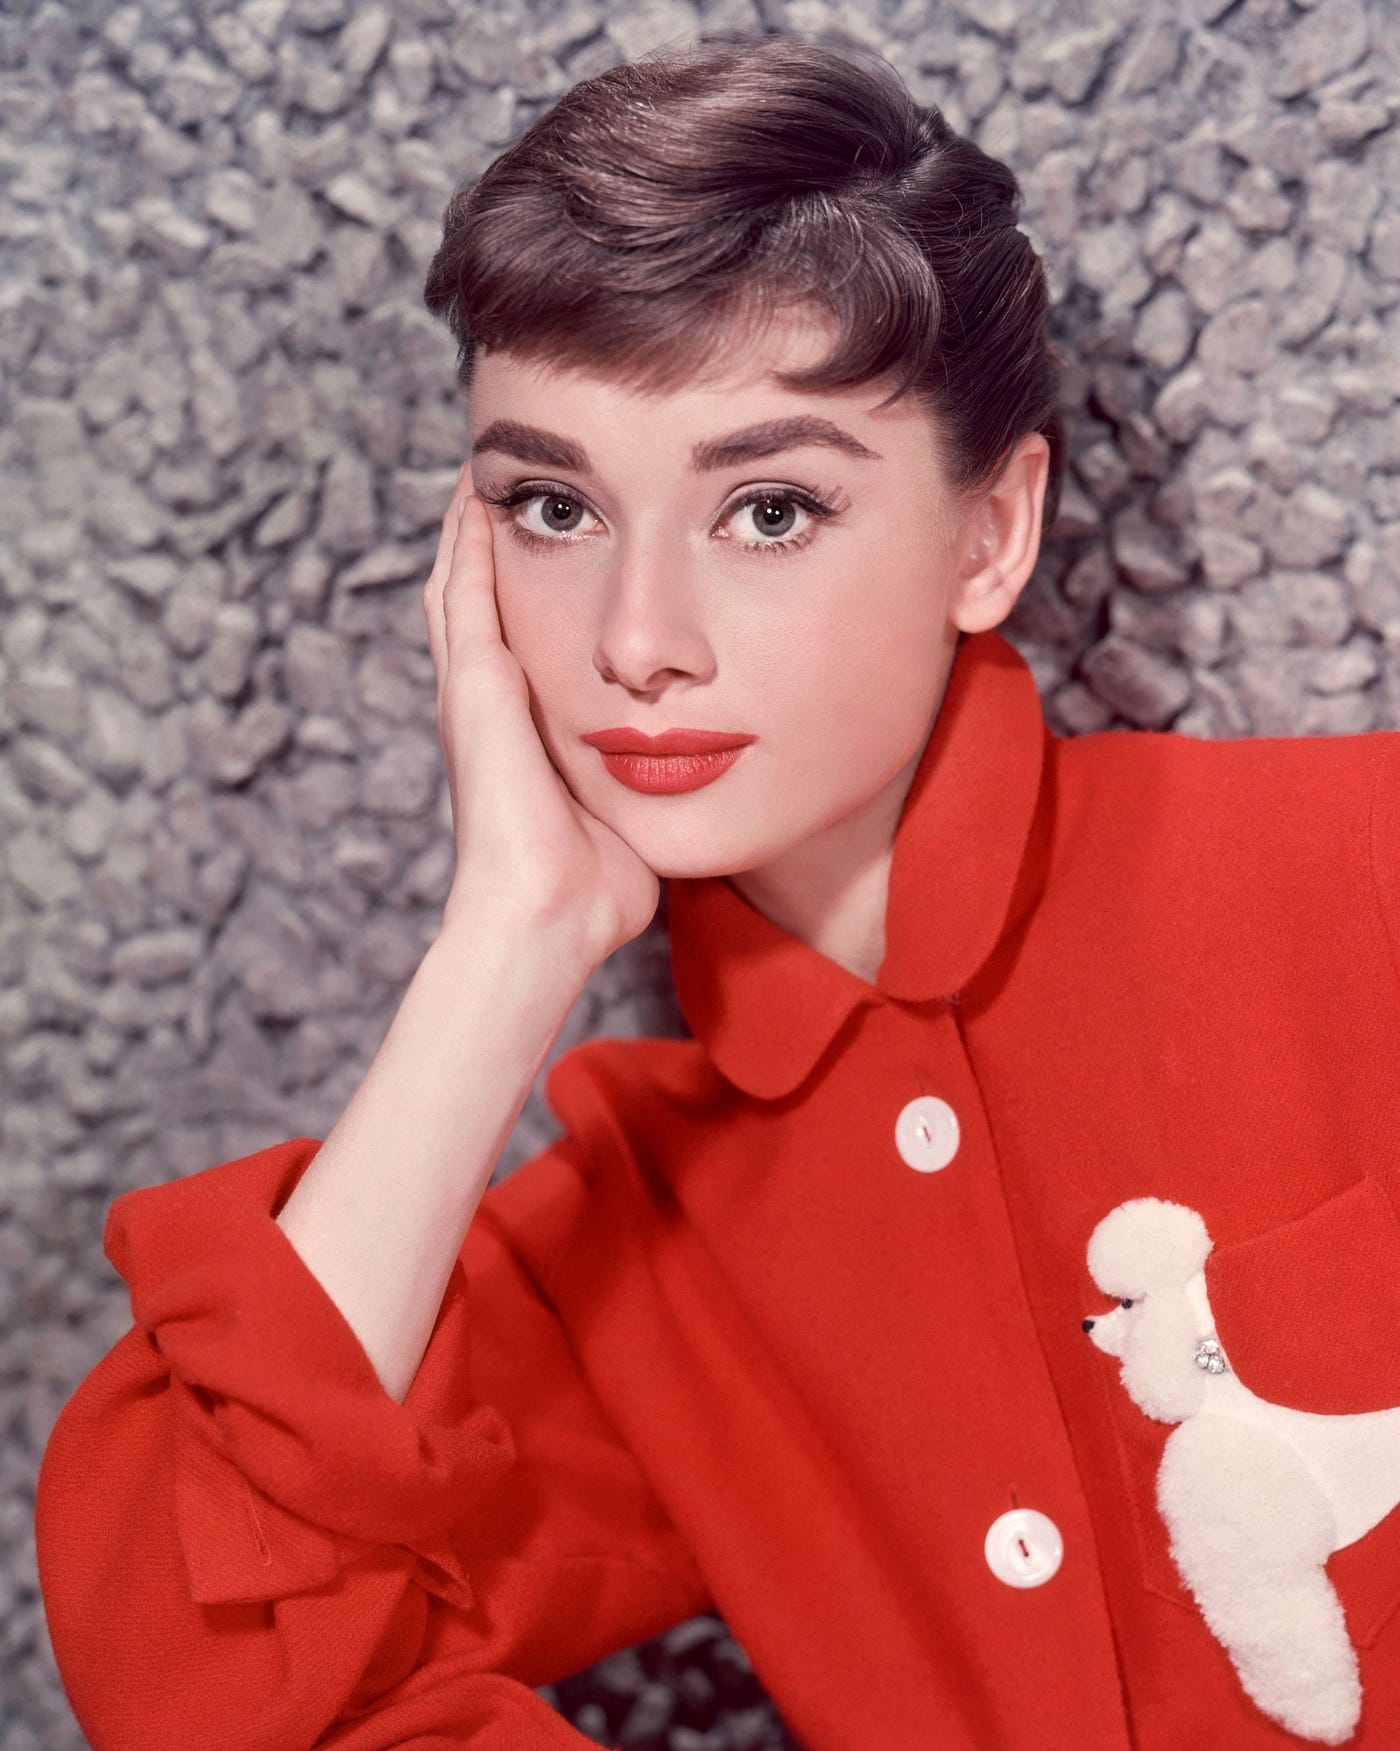 Audrey Hepburn Style: The Key Pieces to Get Her Look